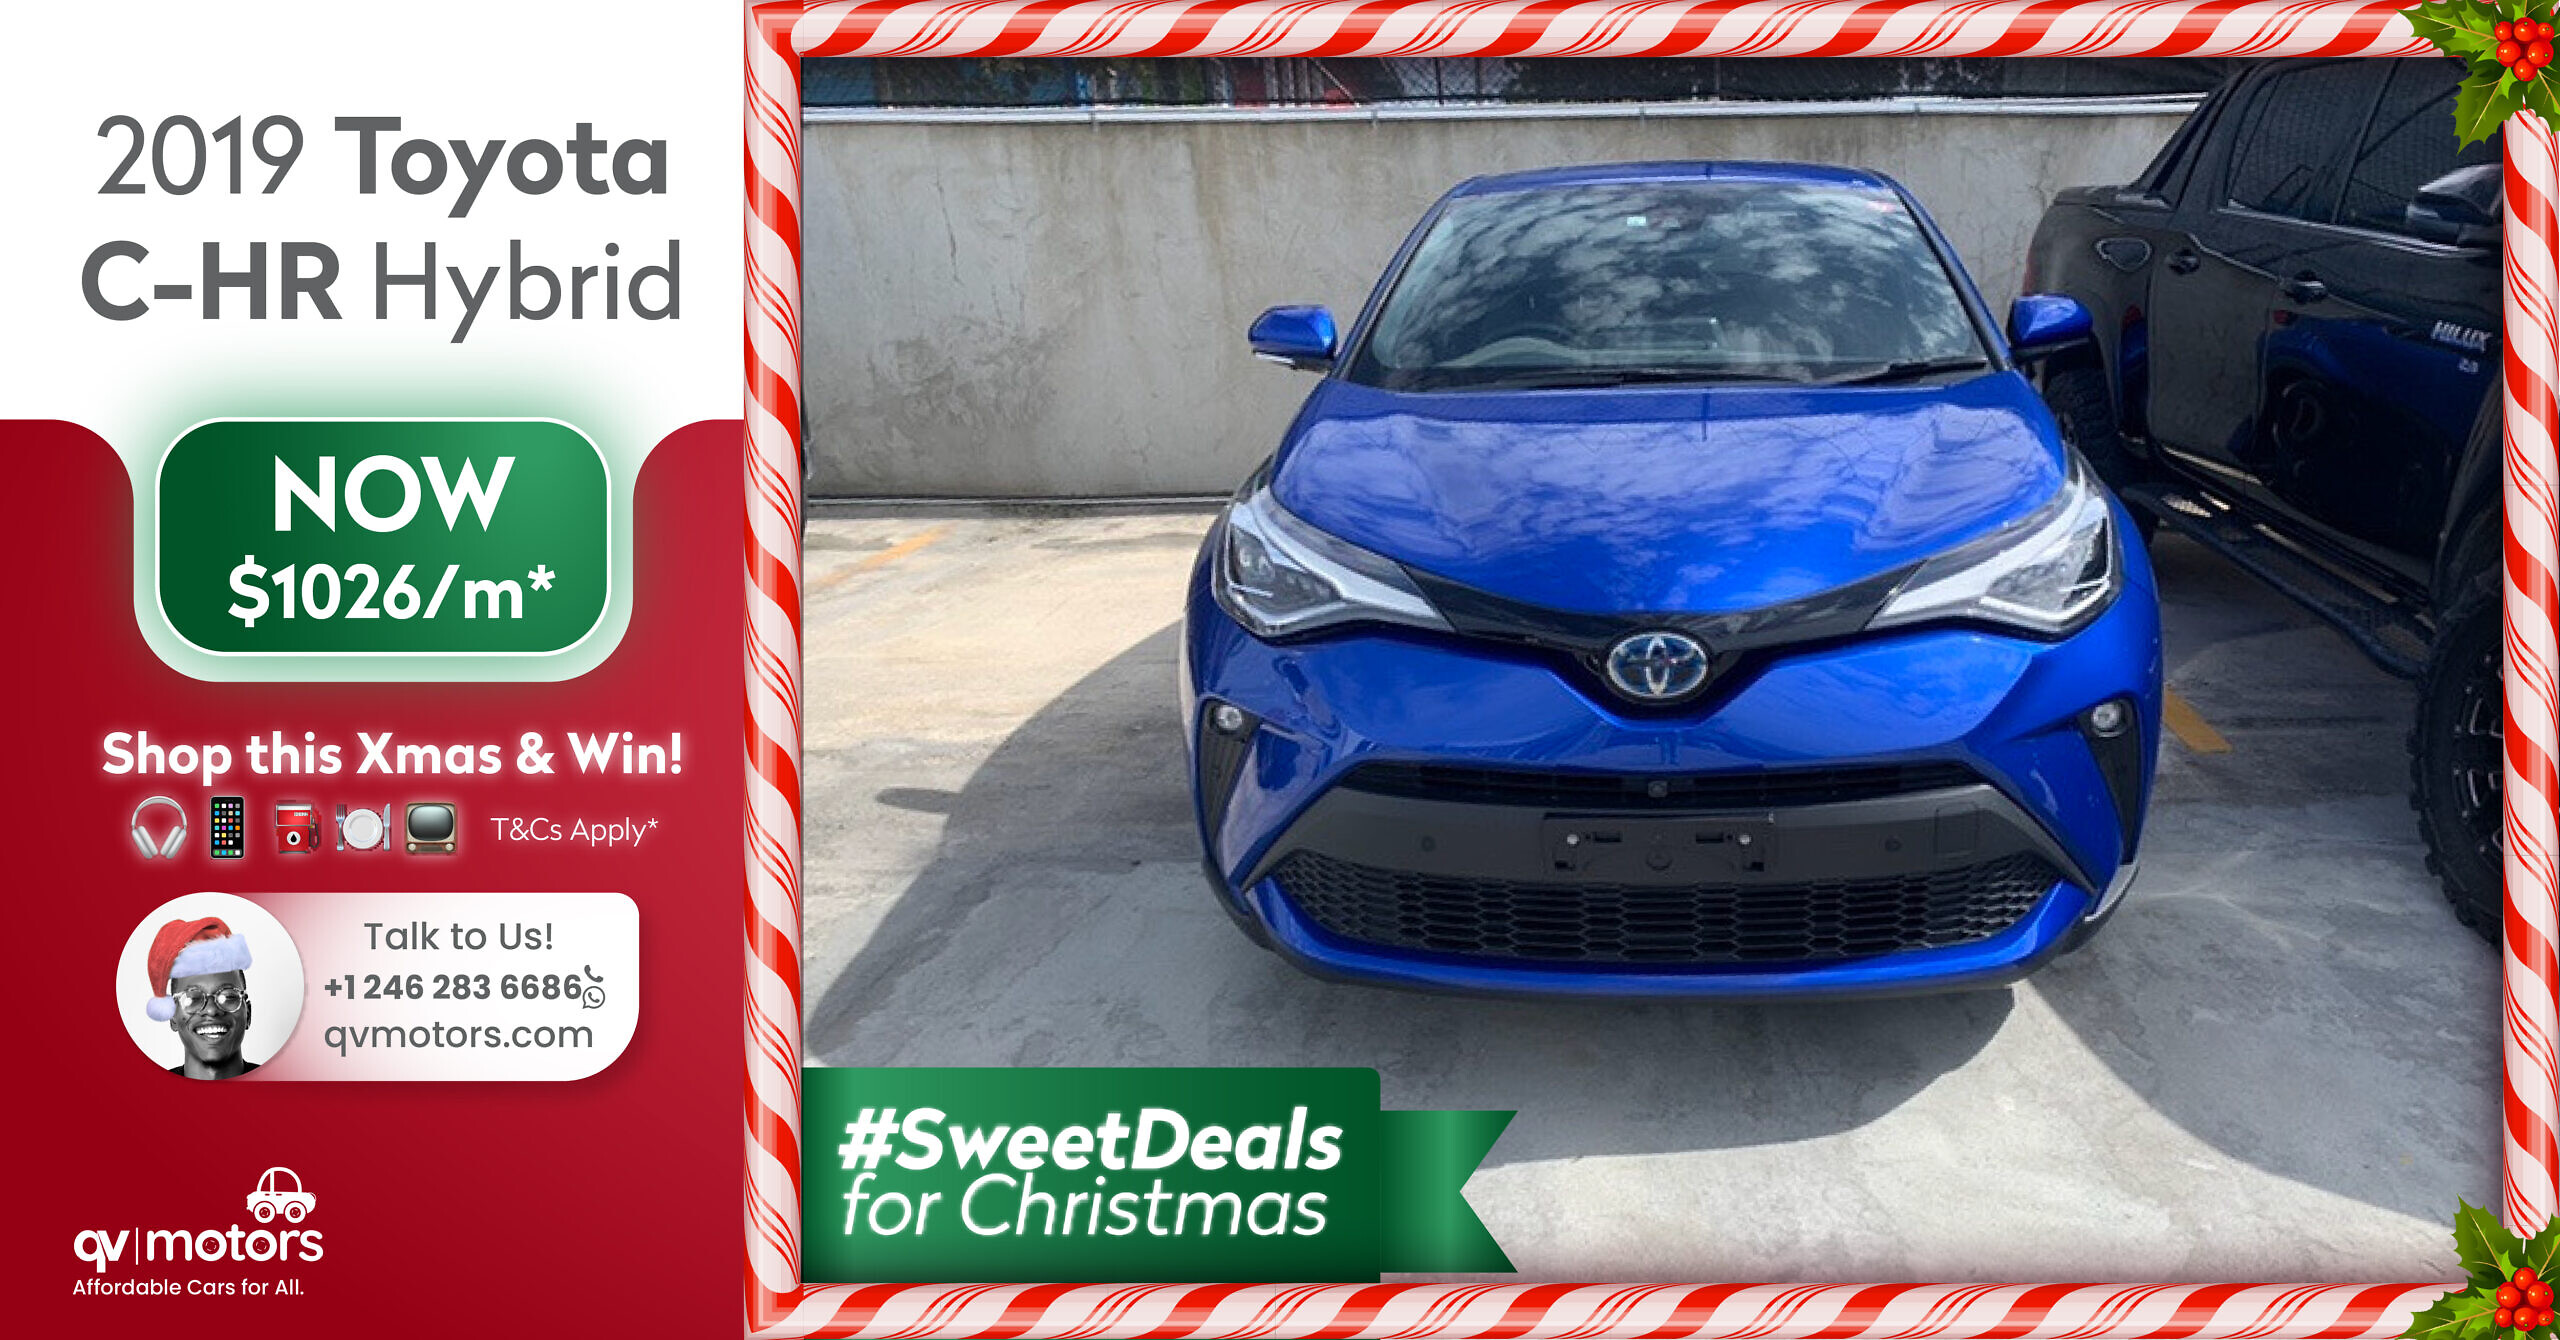 2019 Toyota C-HR Hybrid – #SweetDeals